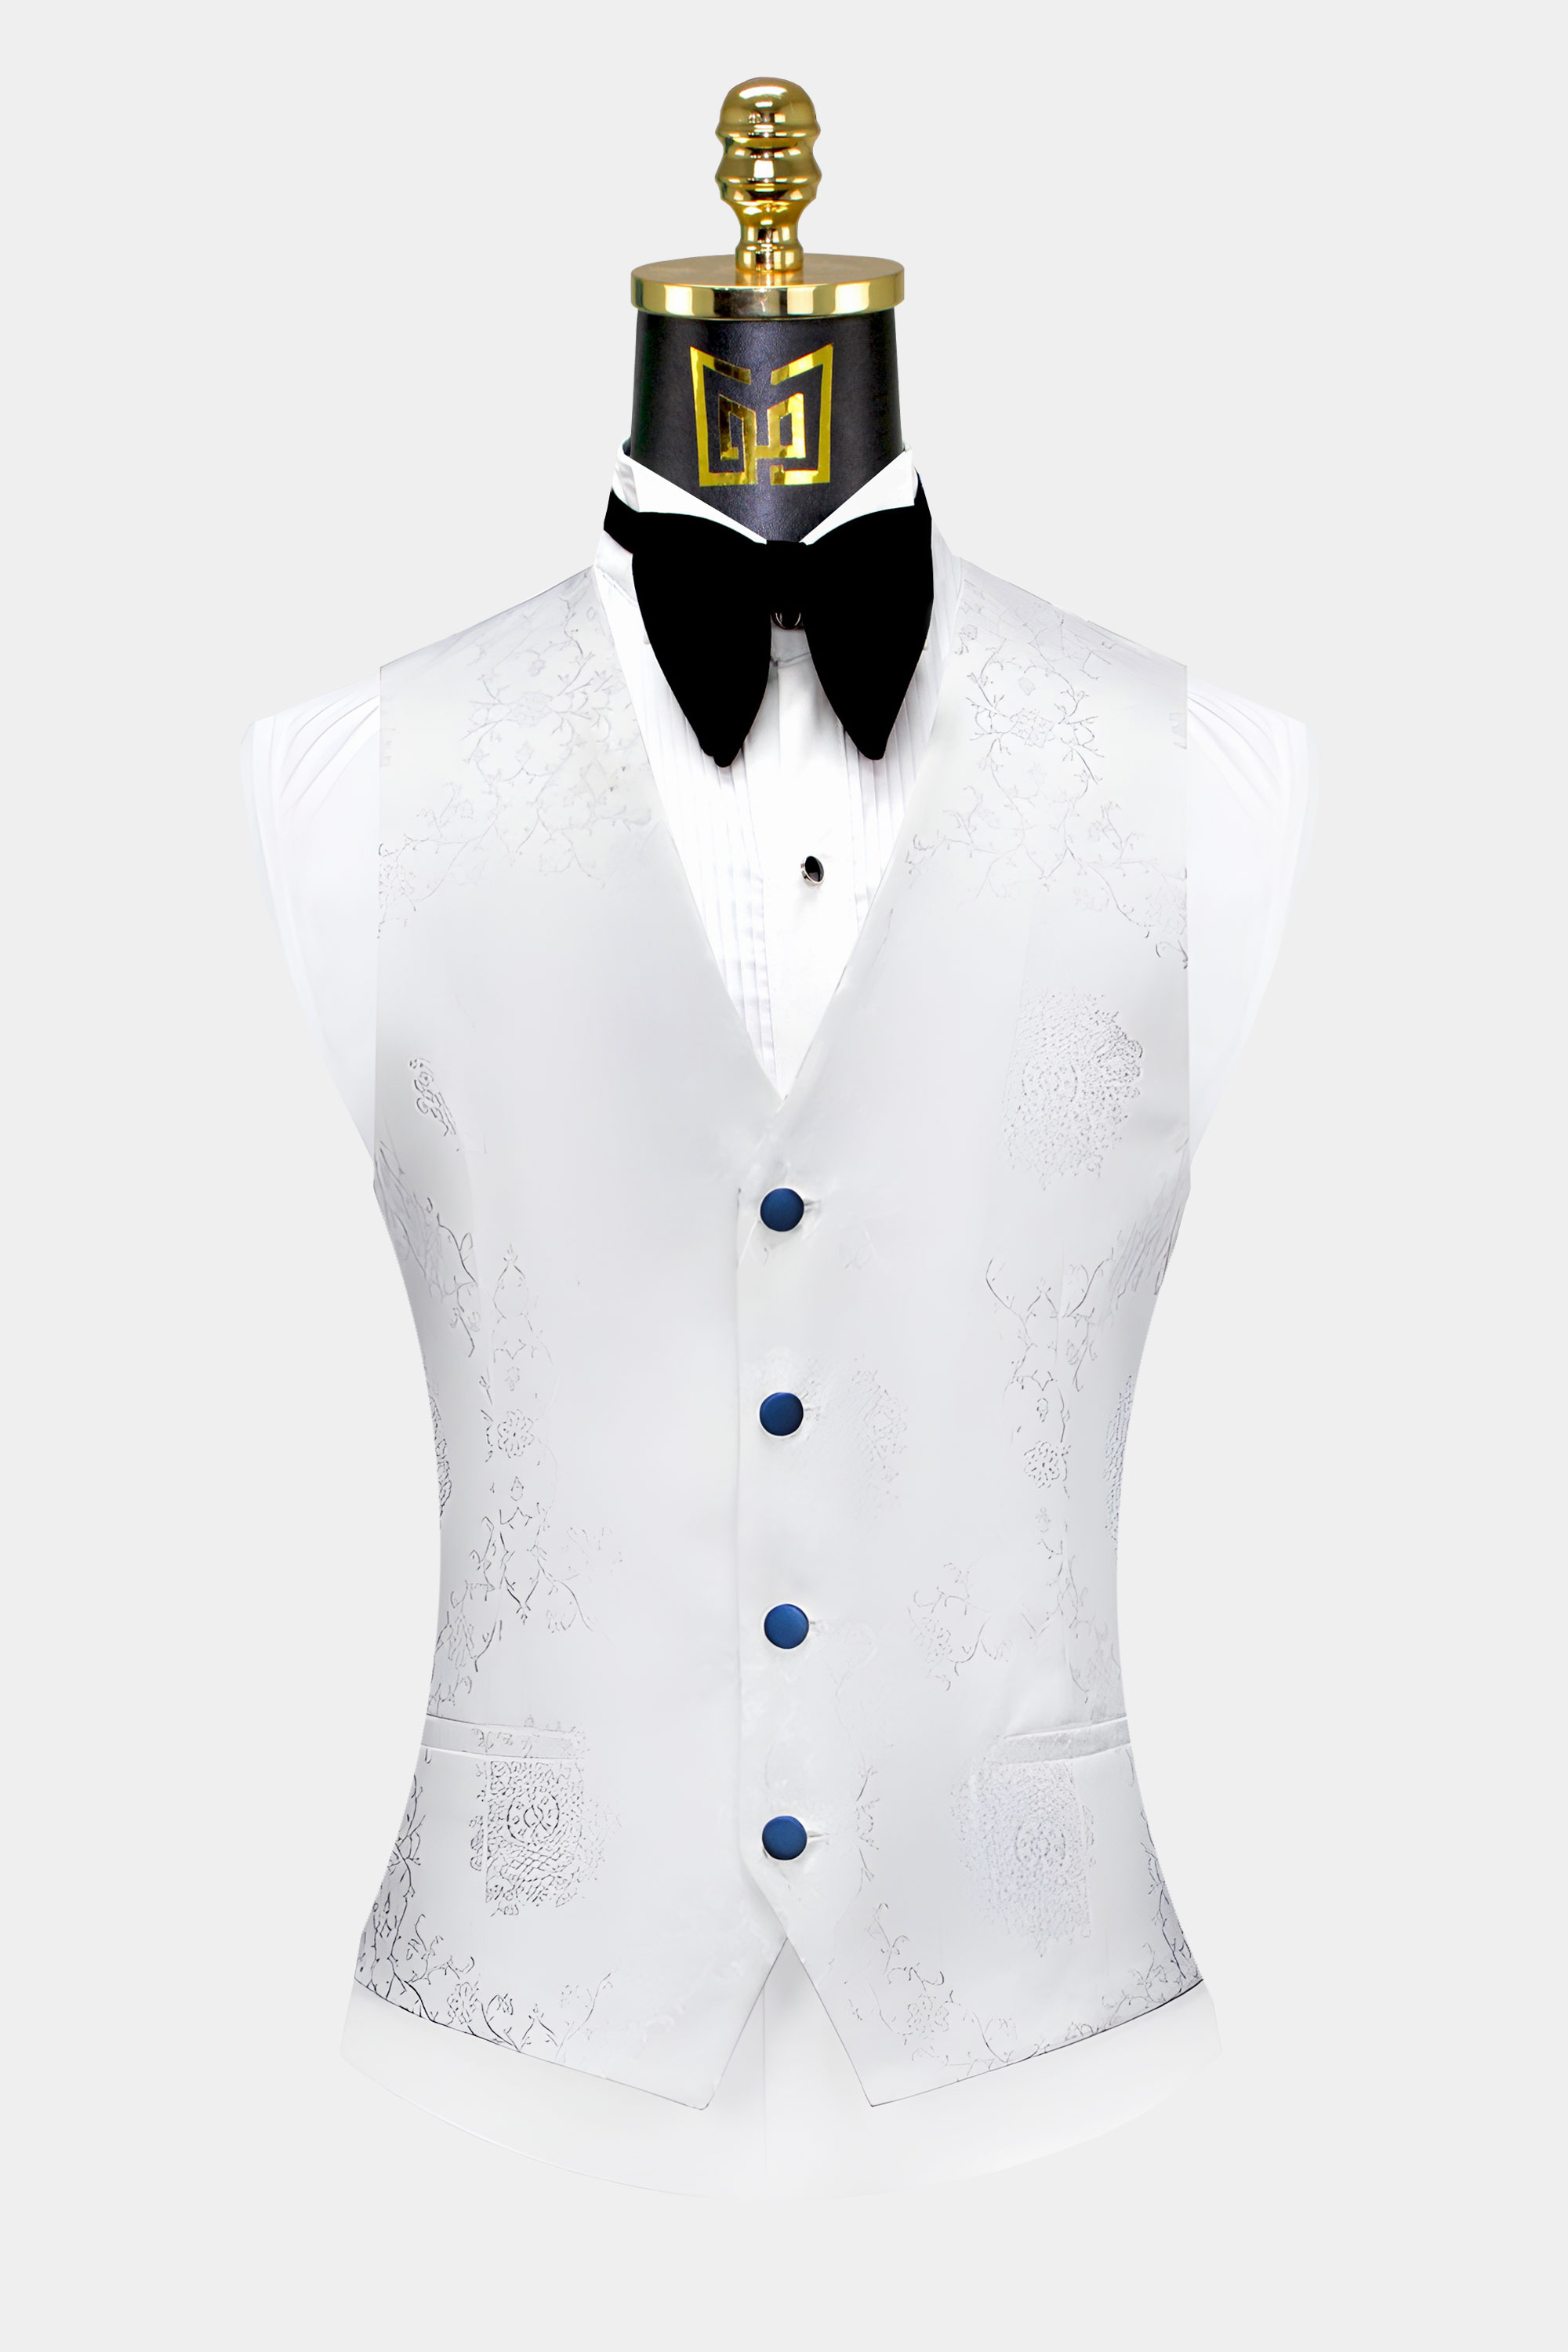 Royal-Blue-and-White-Tuxedo-Vest-from-Gentlemansguru.com